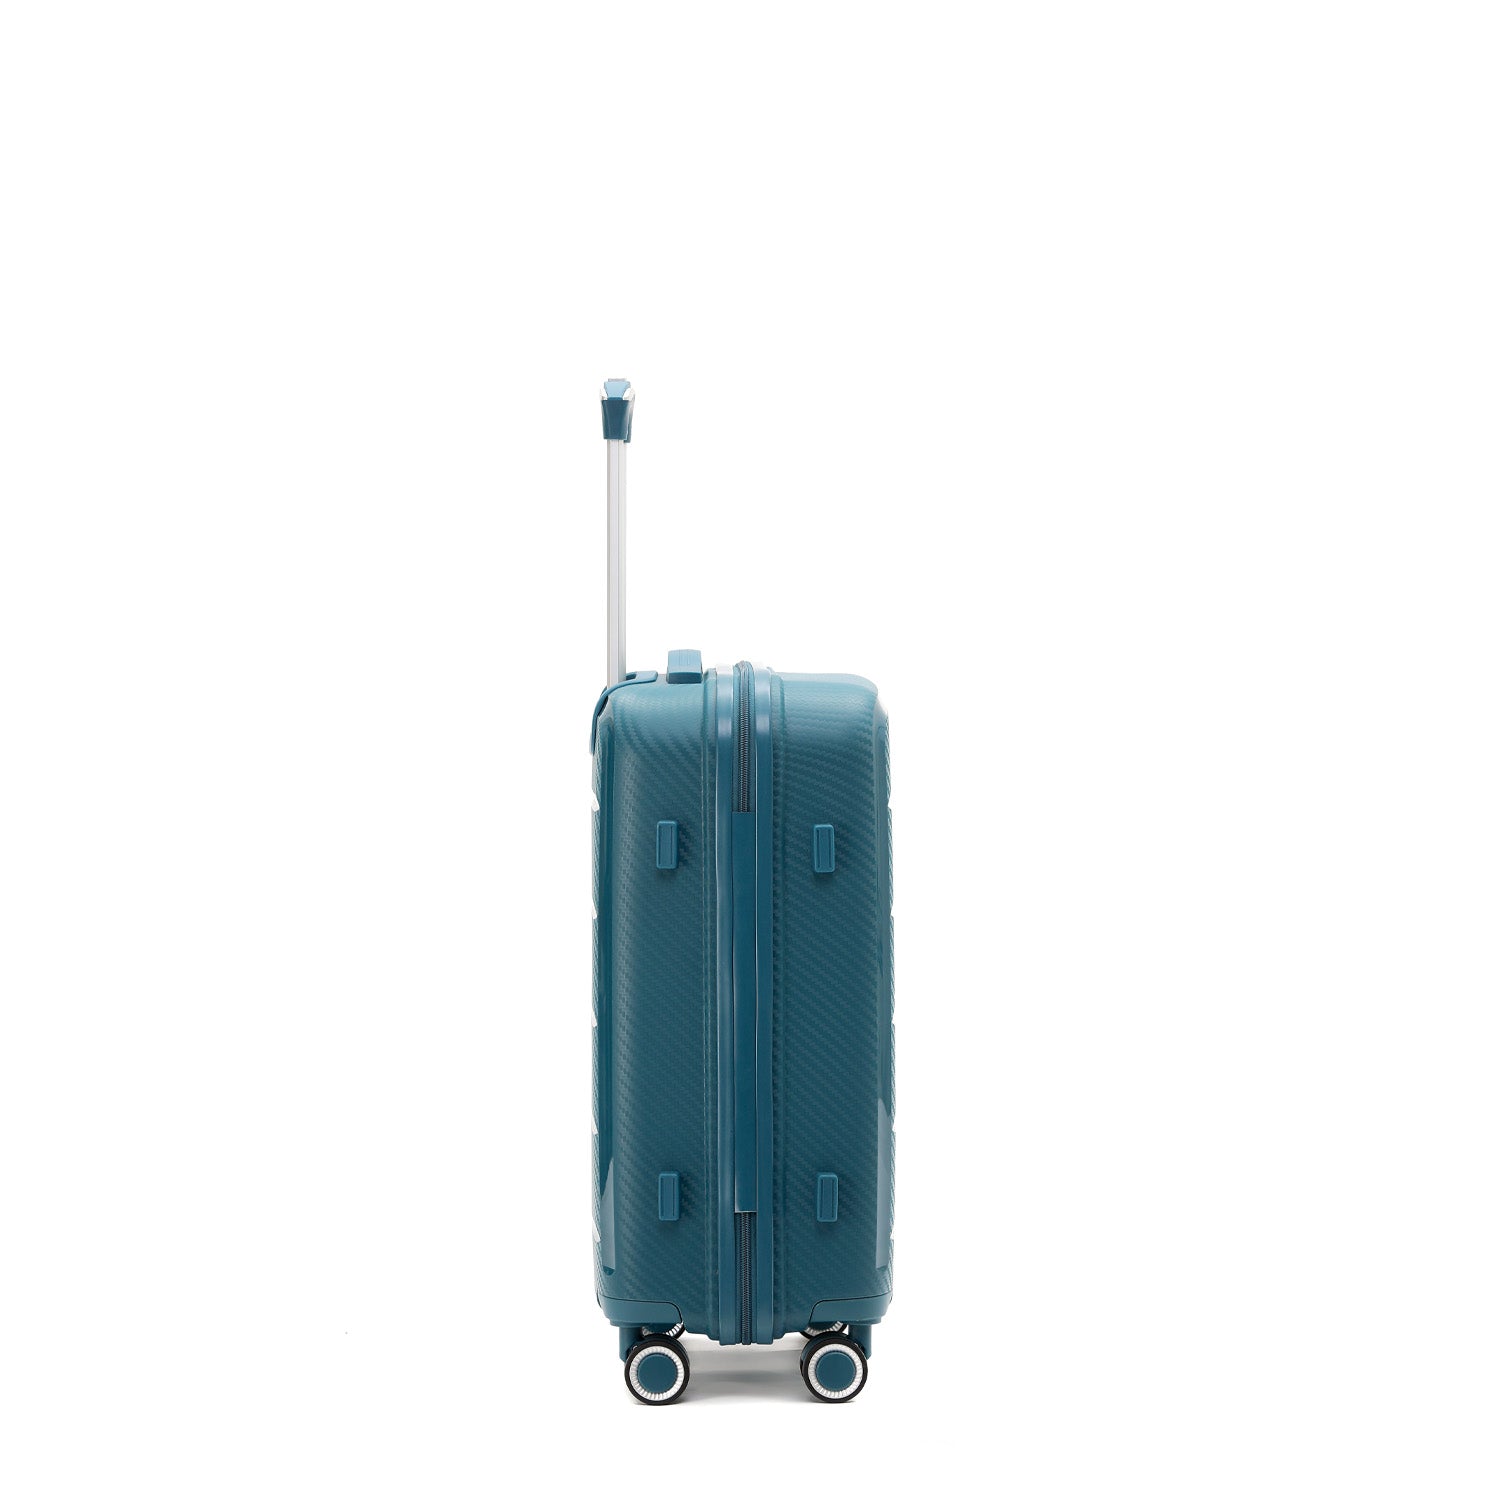 Paklite - PA7350 Set of 3 Suitcases - Blue-19